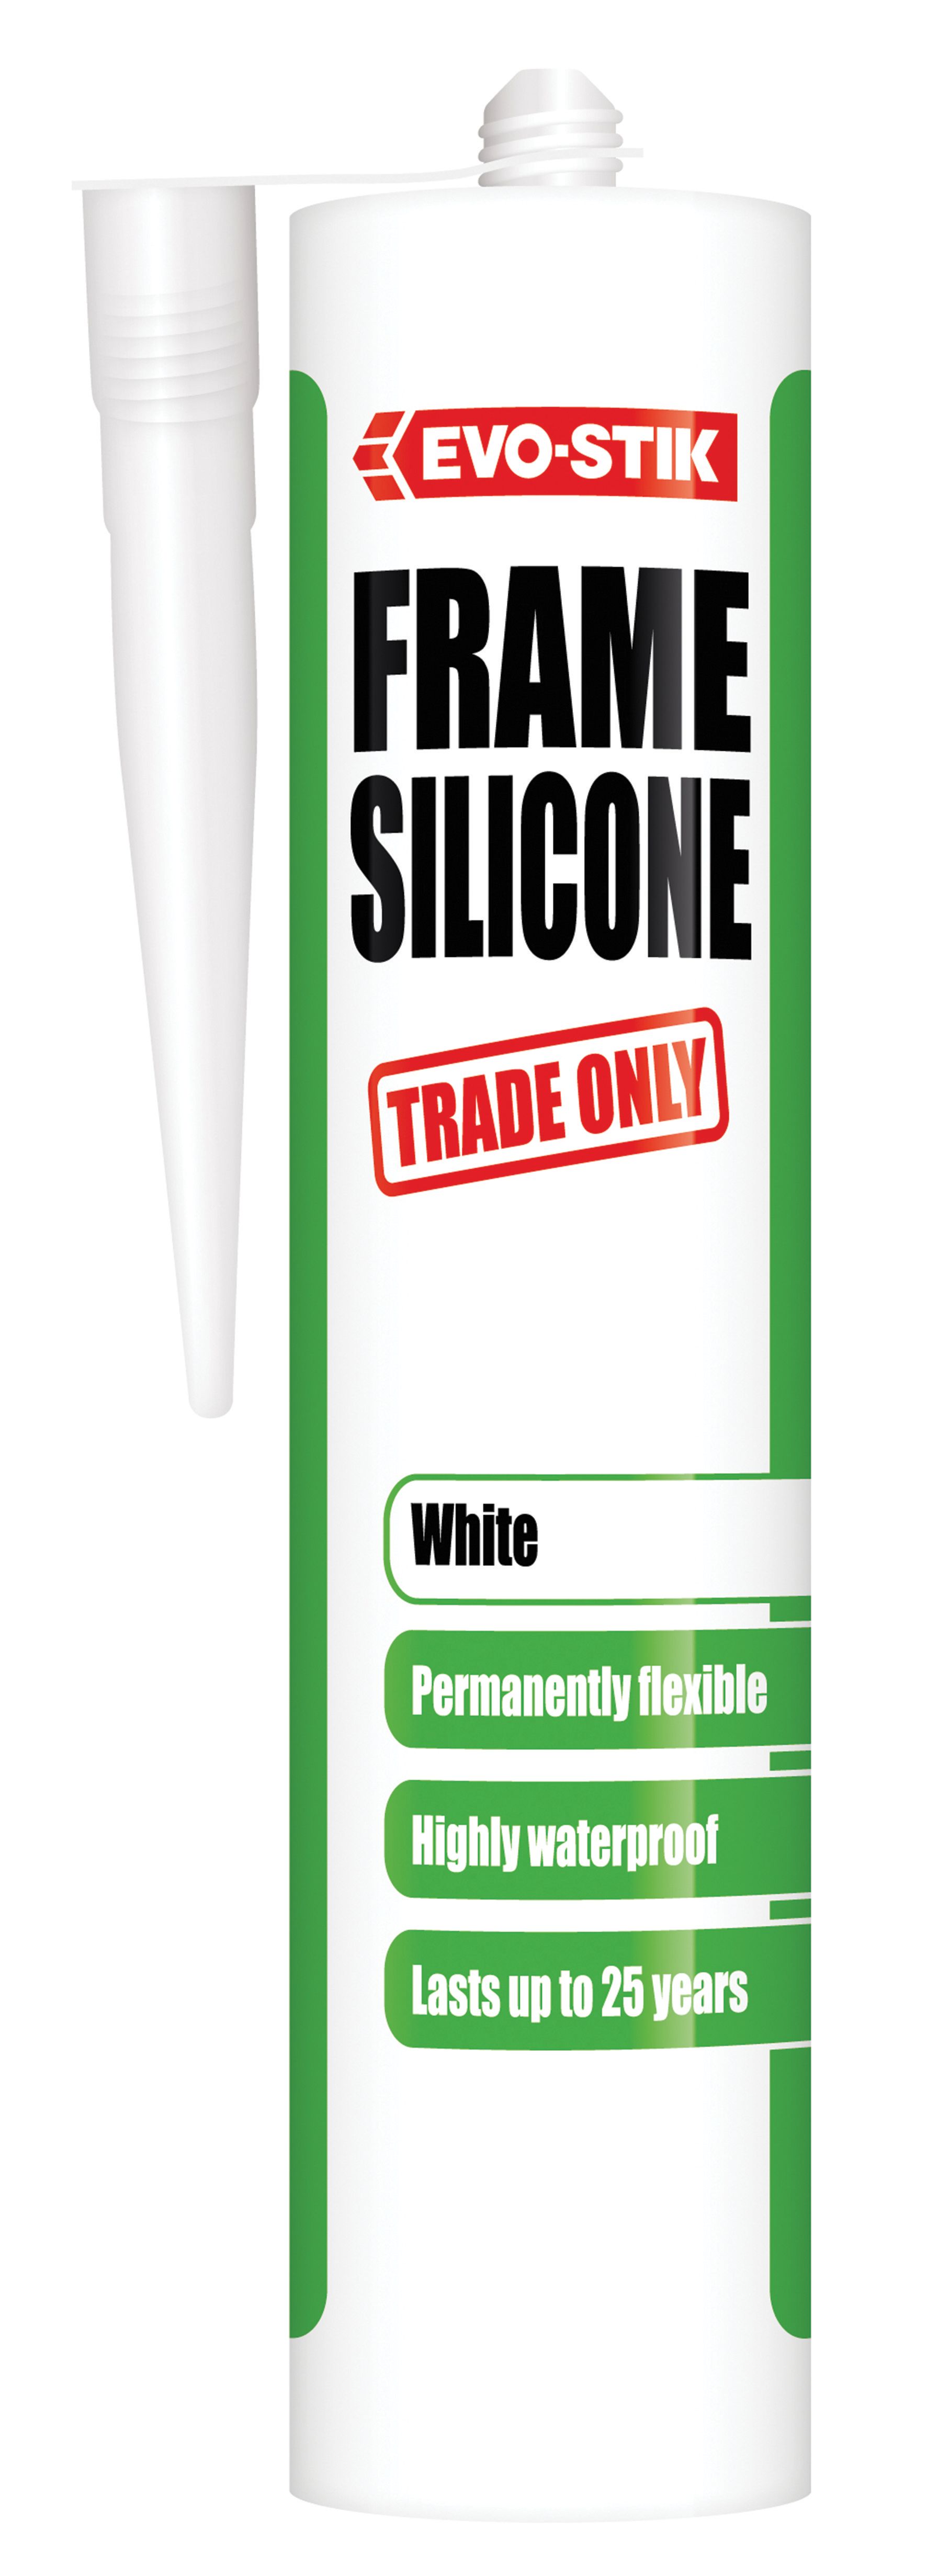 Image of Evo-Stik Trade Only Frame Silicone - White - 280ml